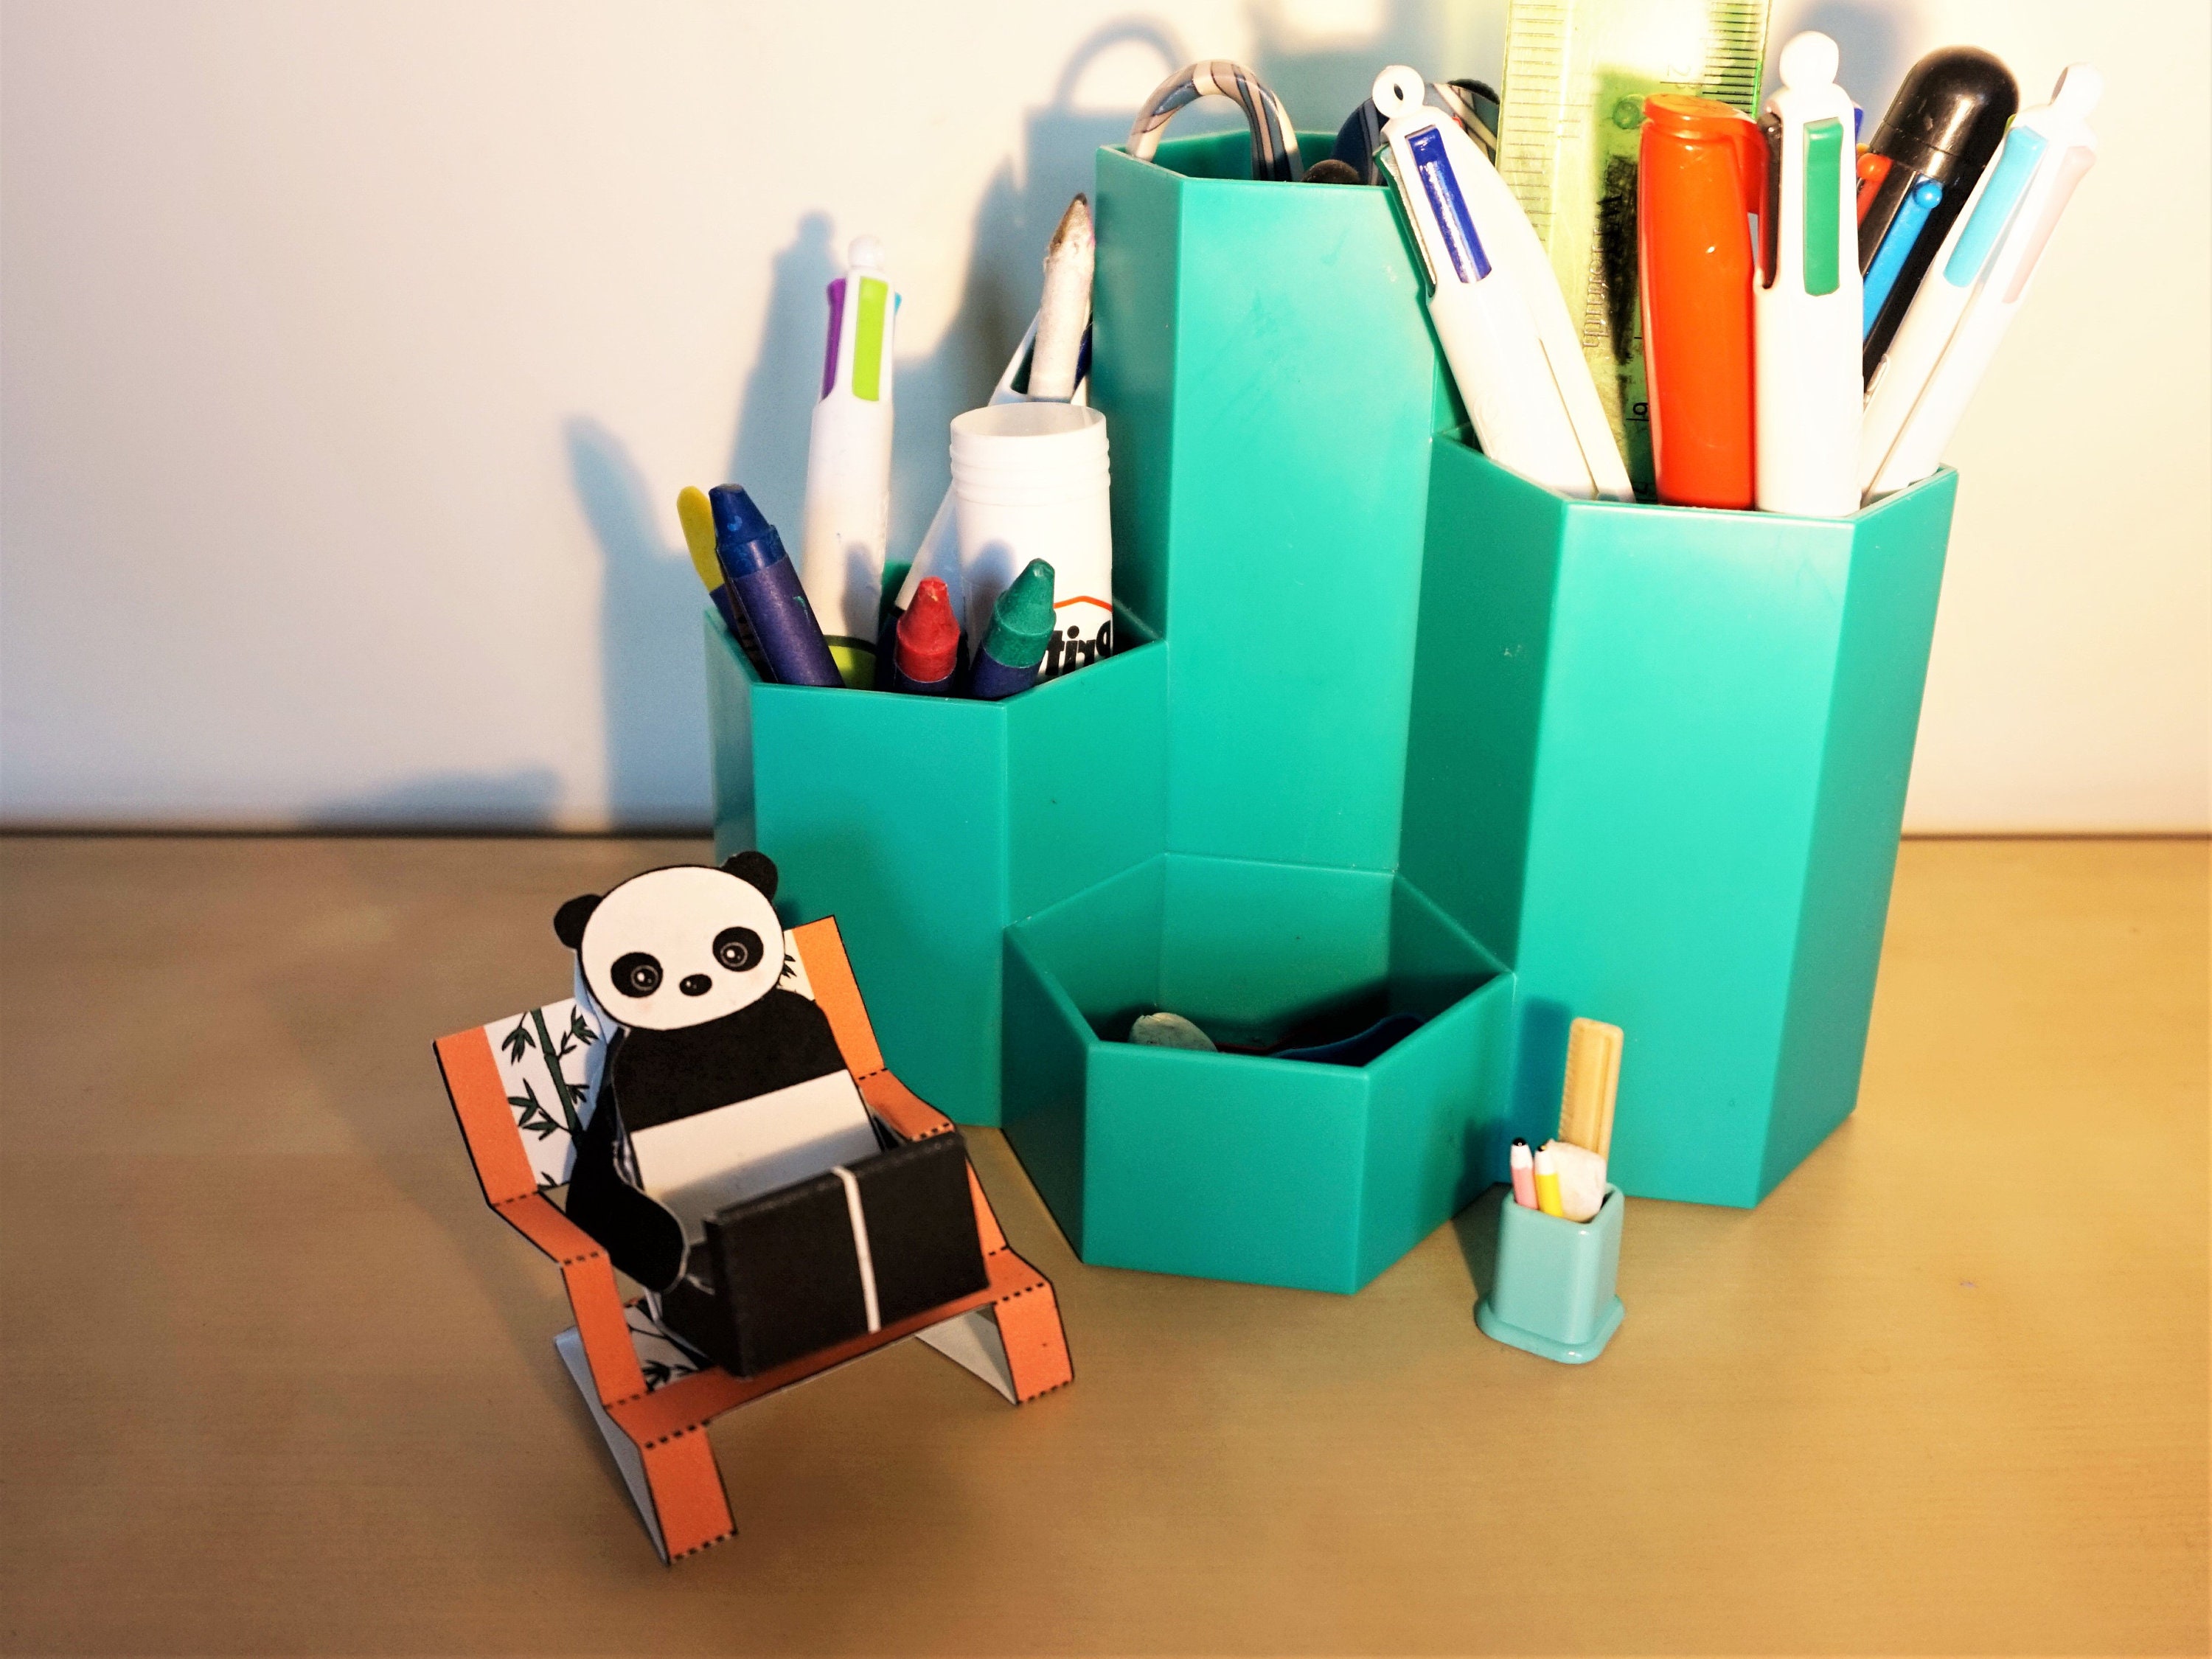 Papercraft Panda Desk Buddy With Bamboo Deckchair and Fact / Reminder Cards  